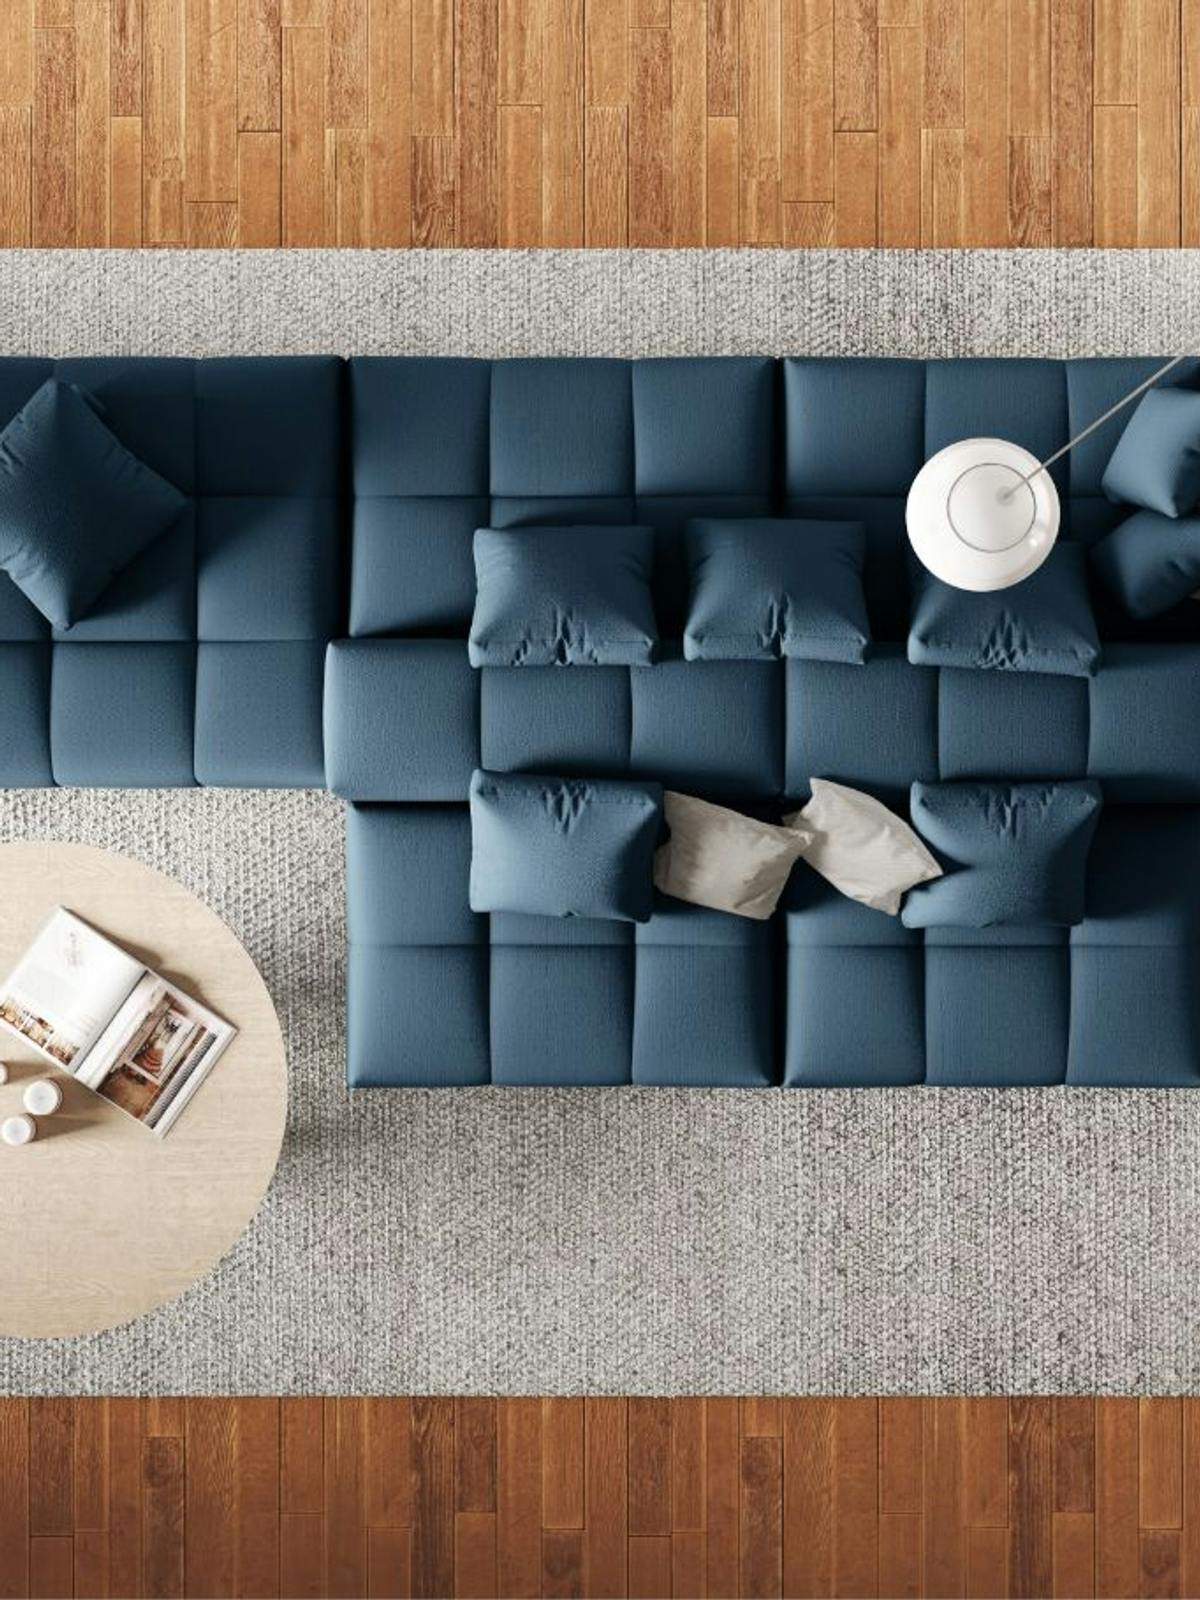 blue-modular-sofa-on-wooden-tiling